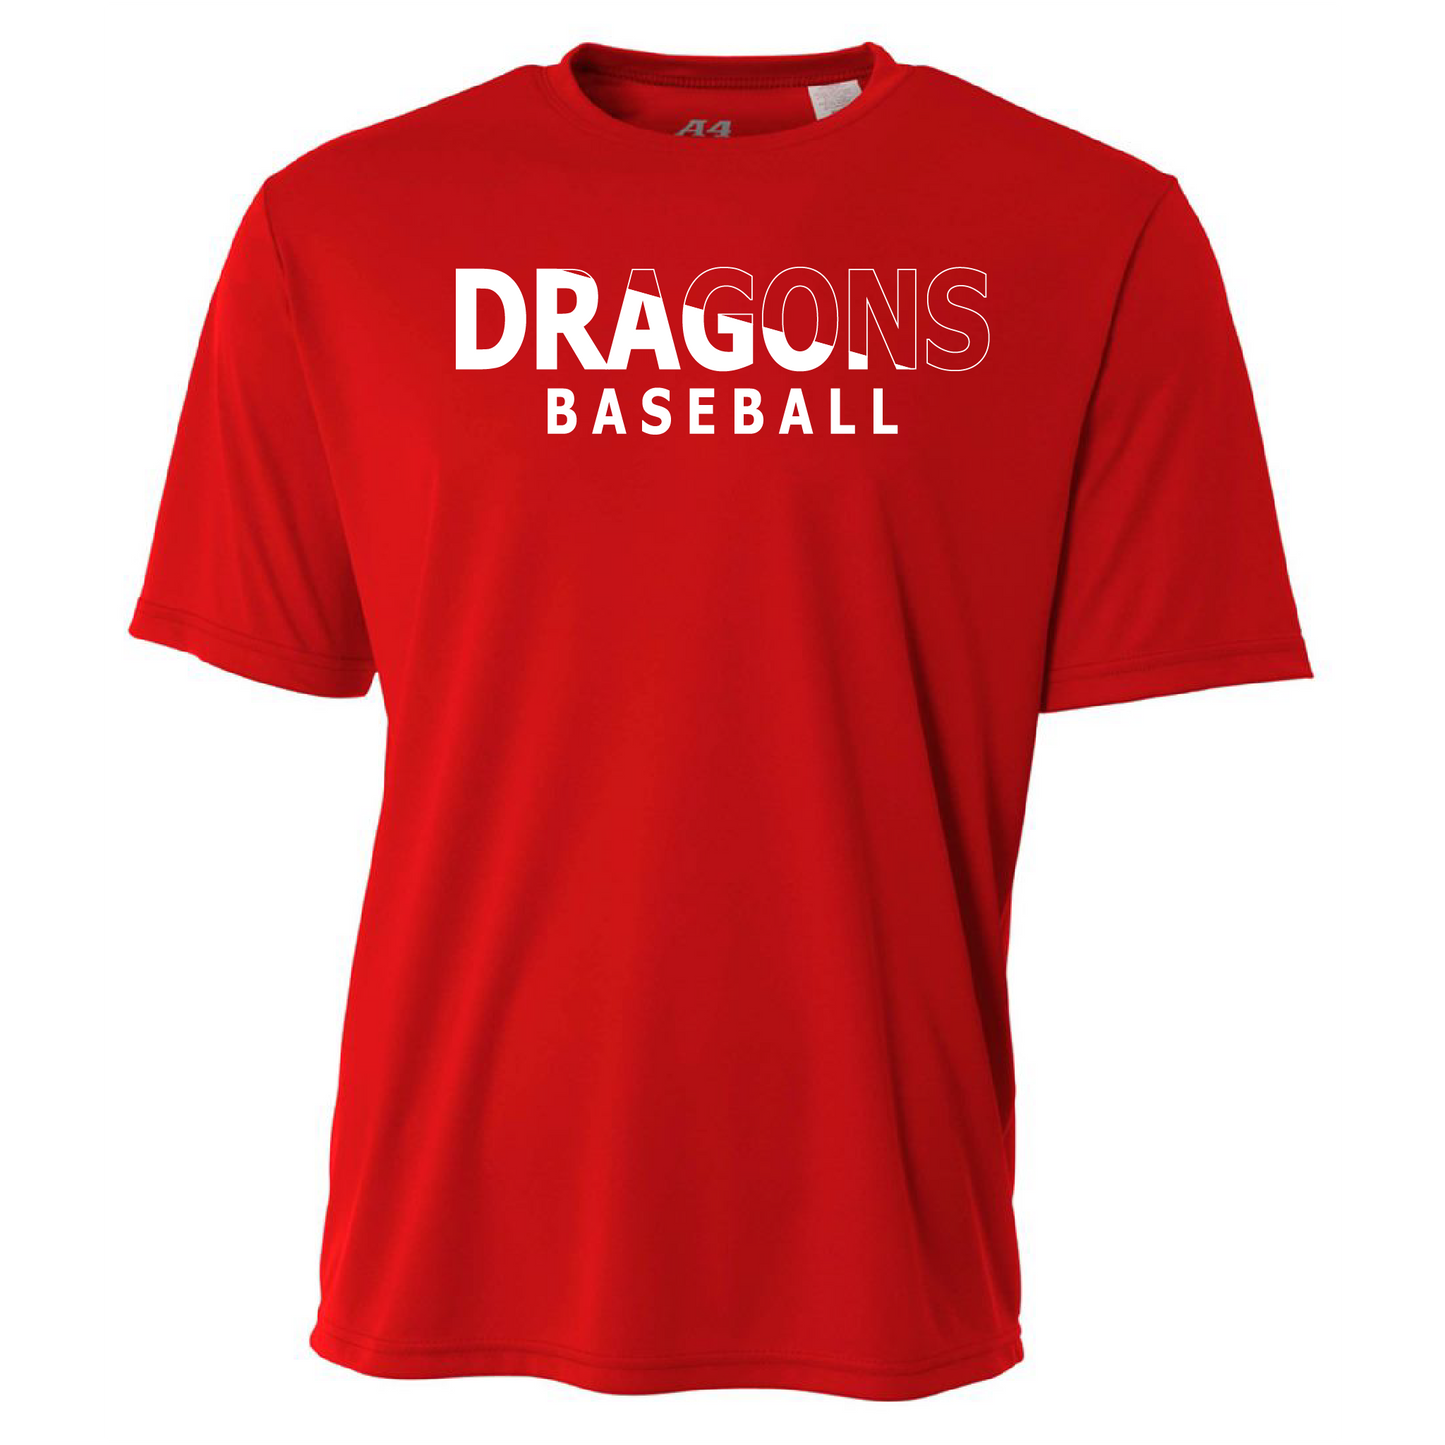 Mens S/S T-Shirt - Dragons Baseball Slashed White